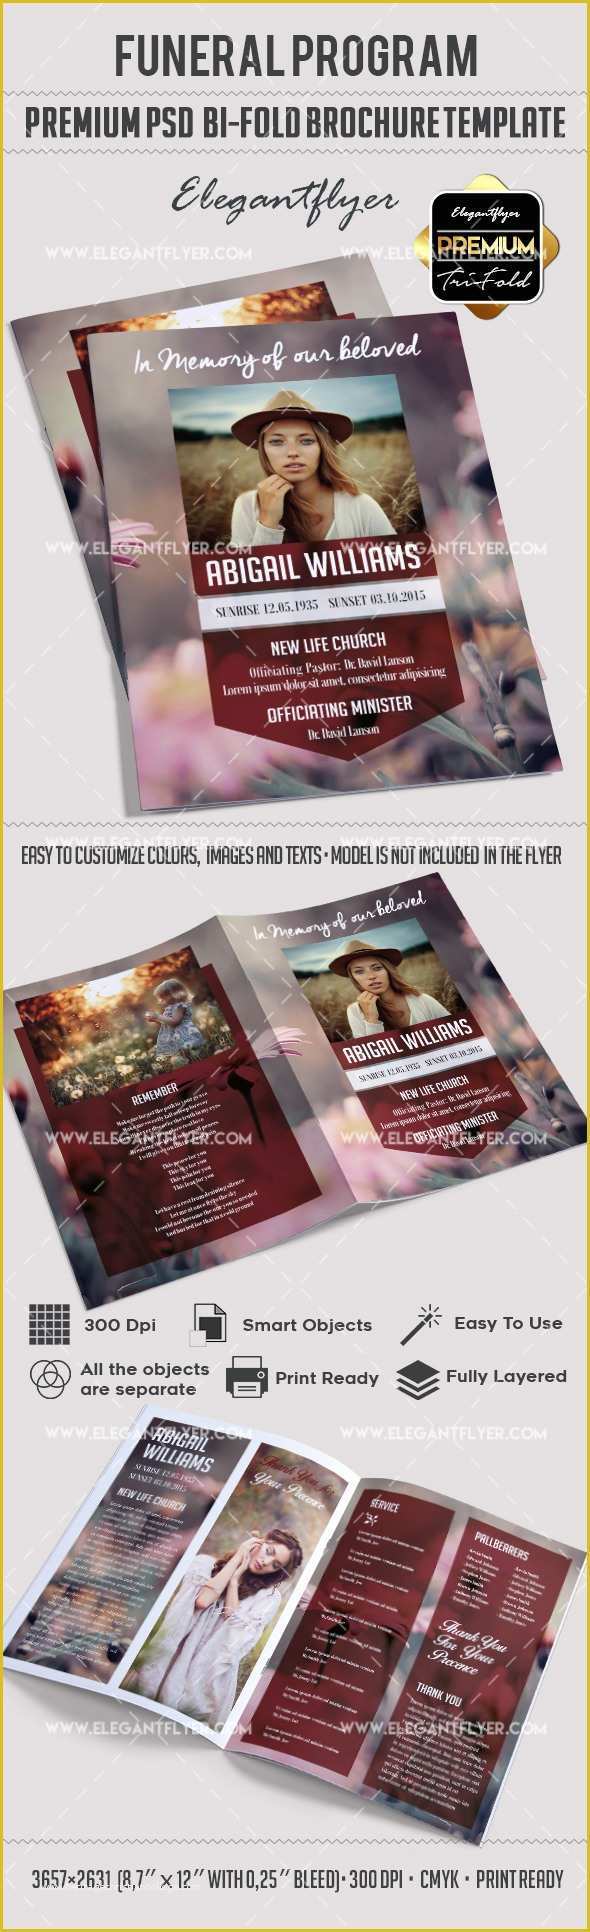 Free Funeral Flyer Template Psd Of Designs Funeral Programs Bi Fold Brochure – by Elegantflyer